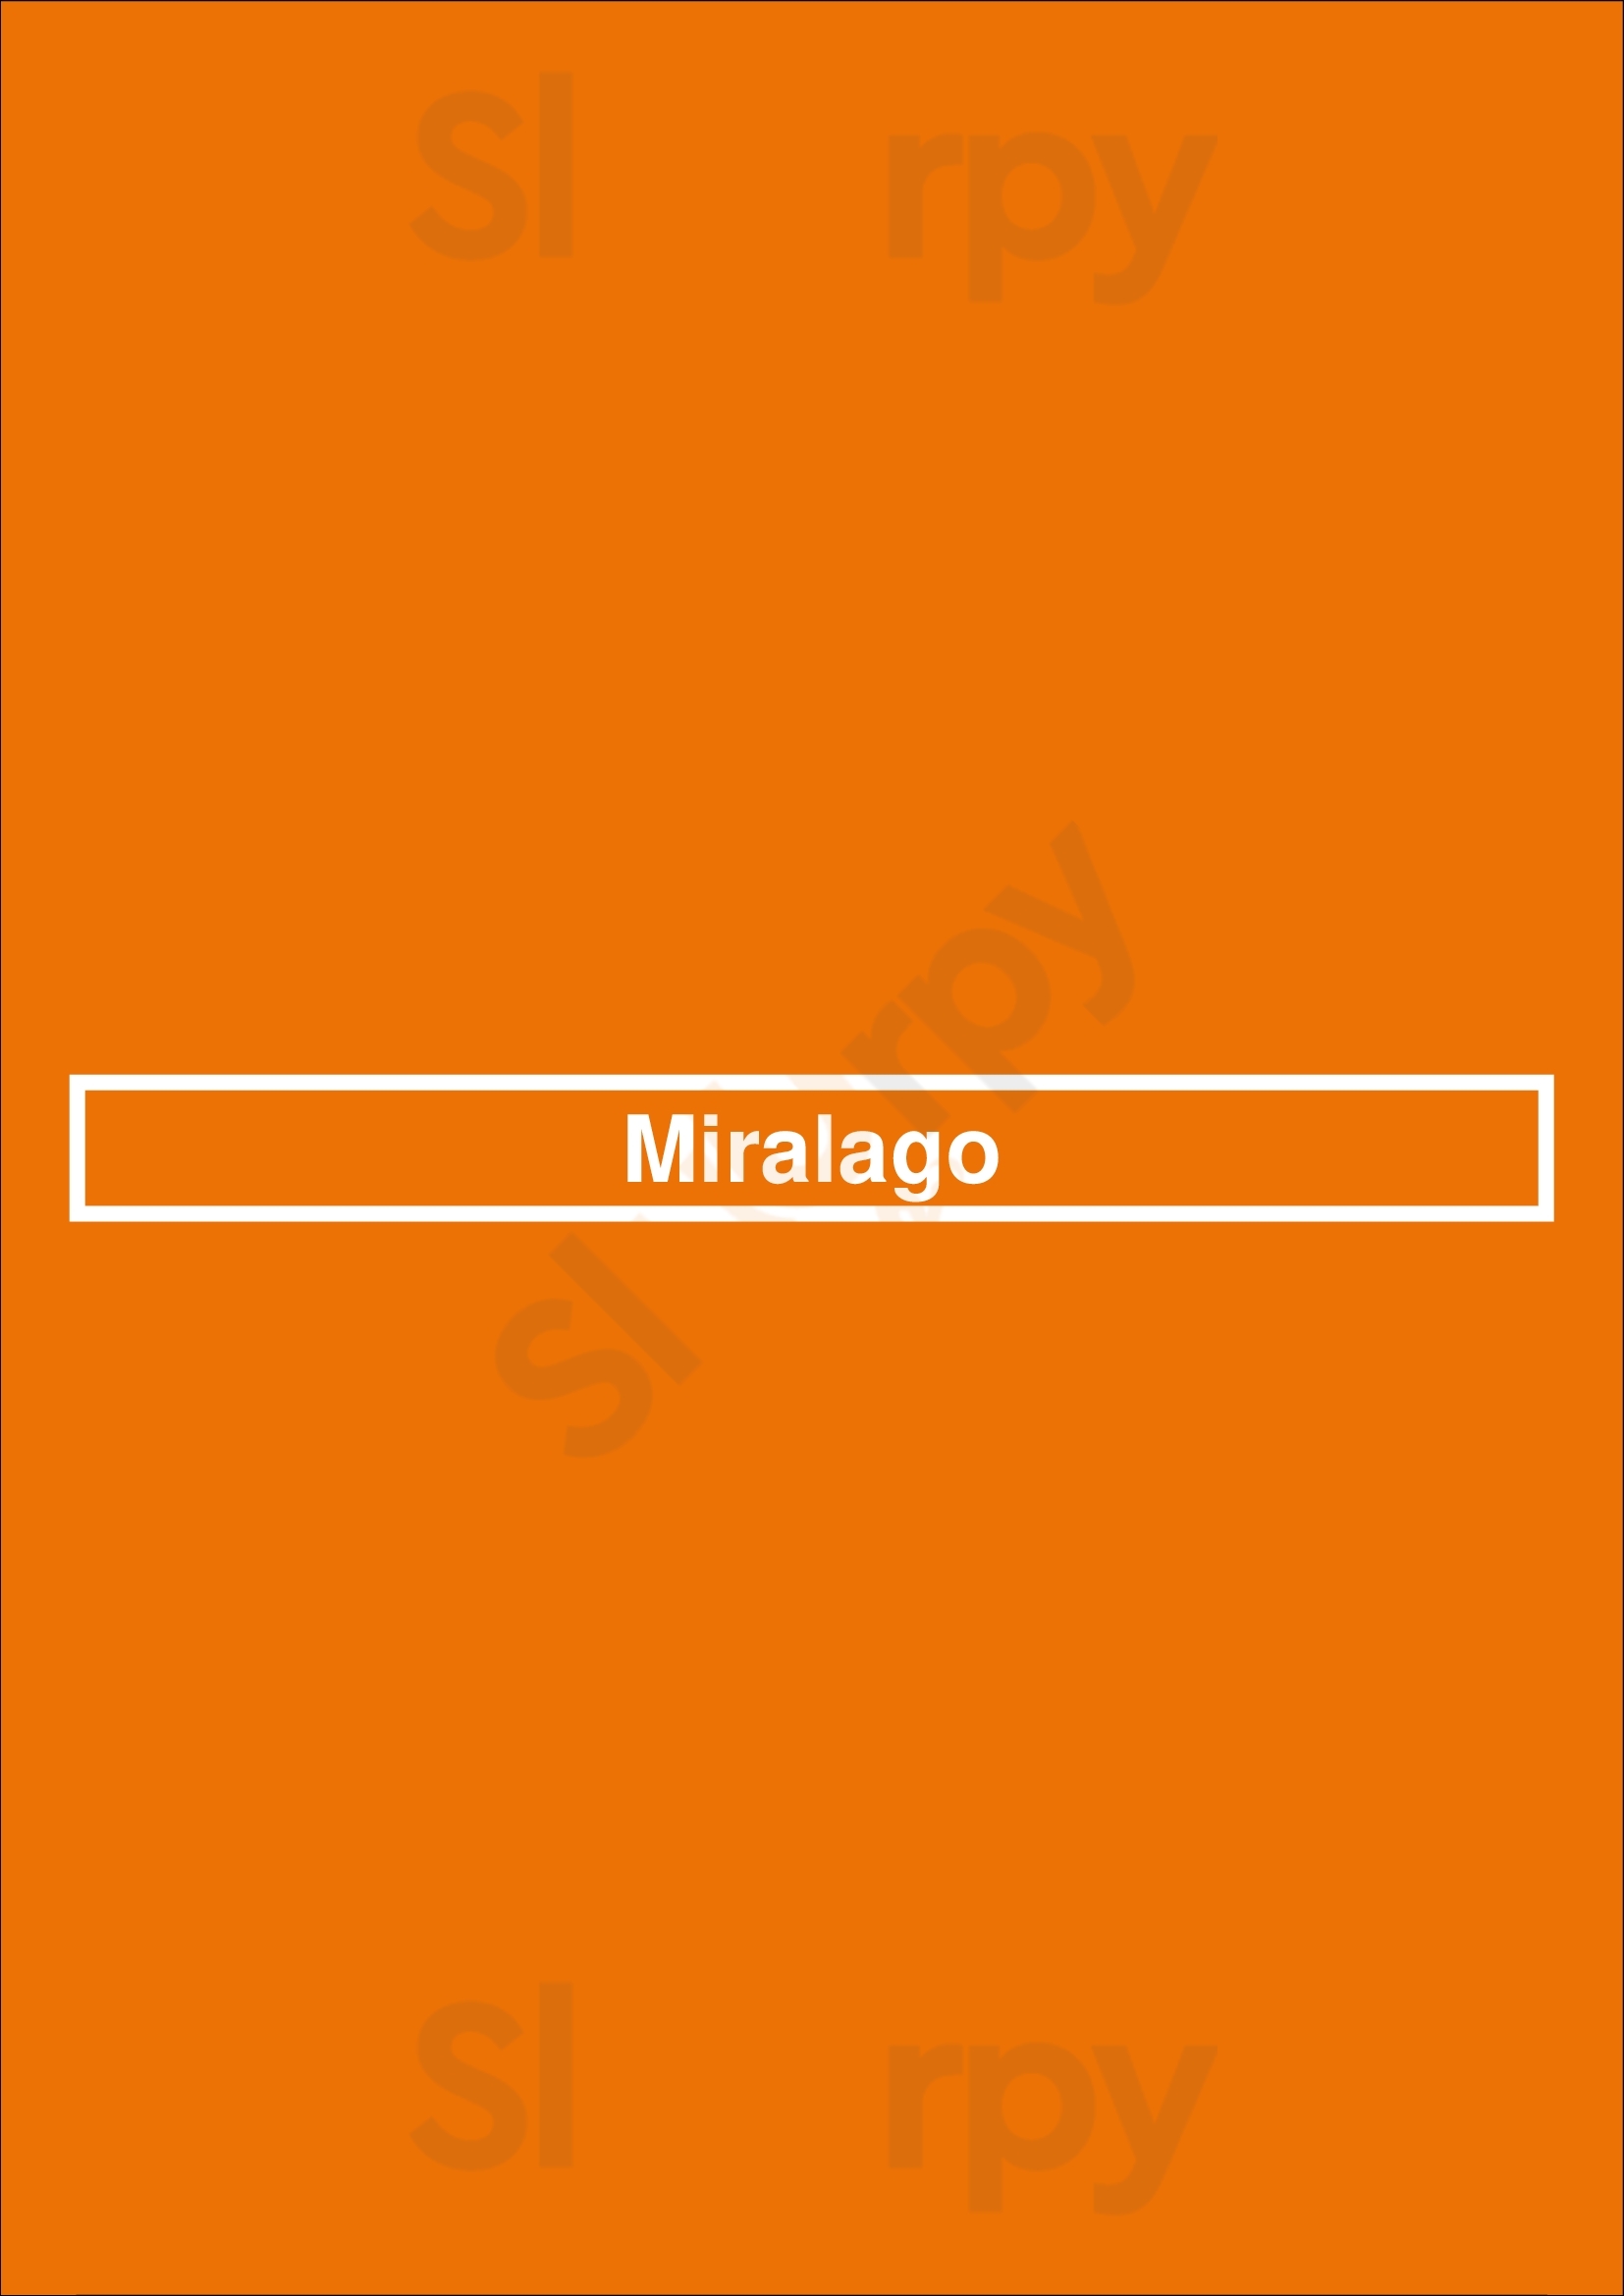 Miralago Vilamoura  Menu - 1